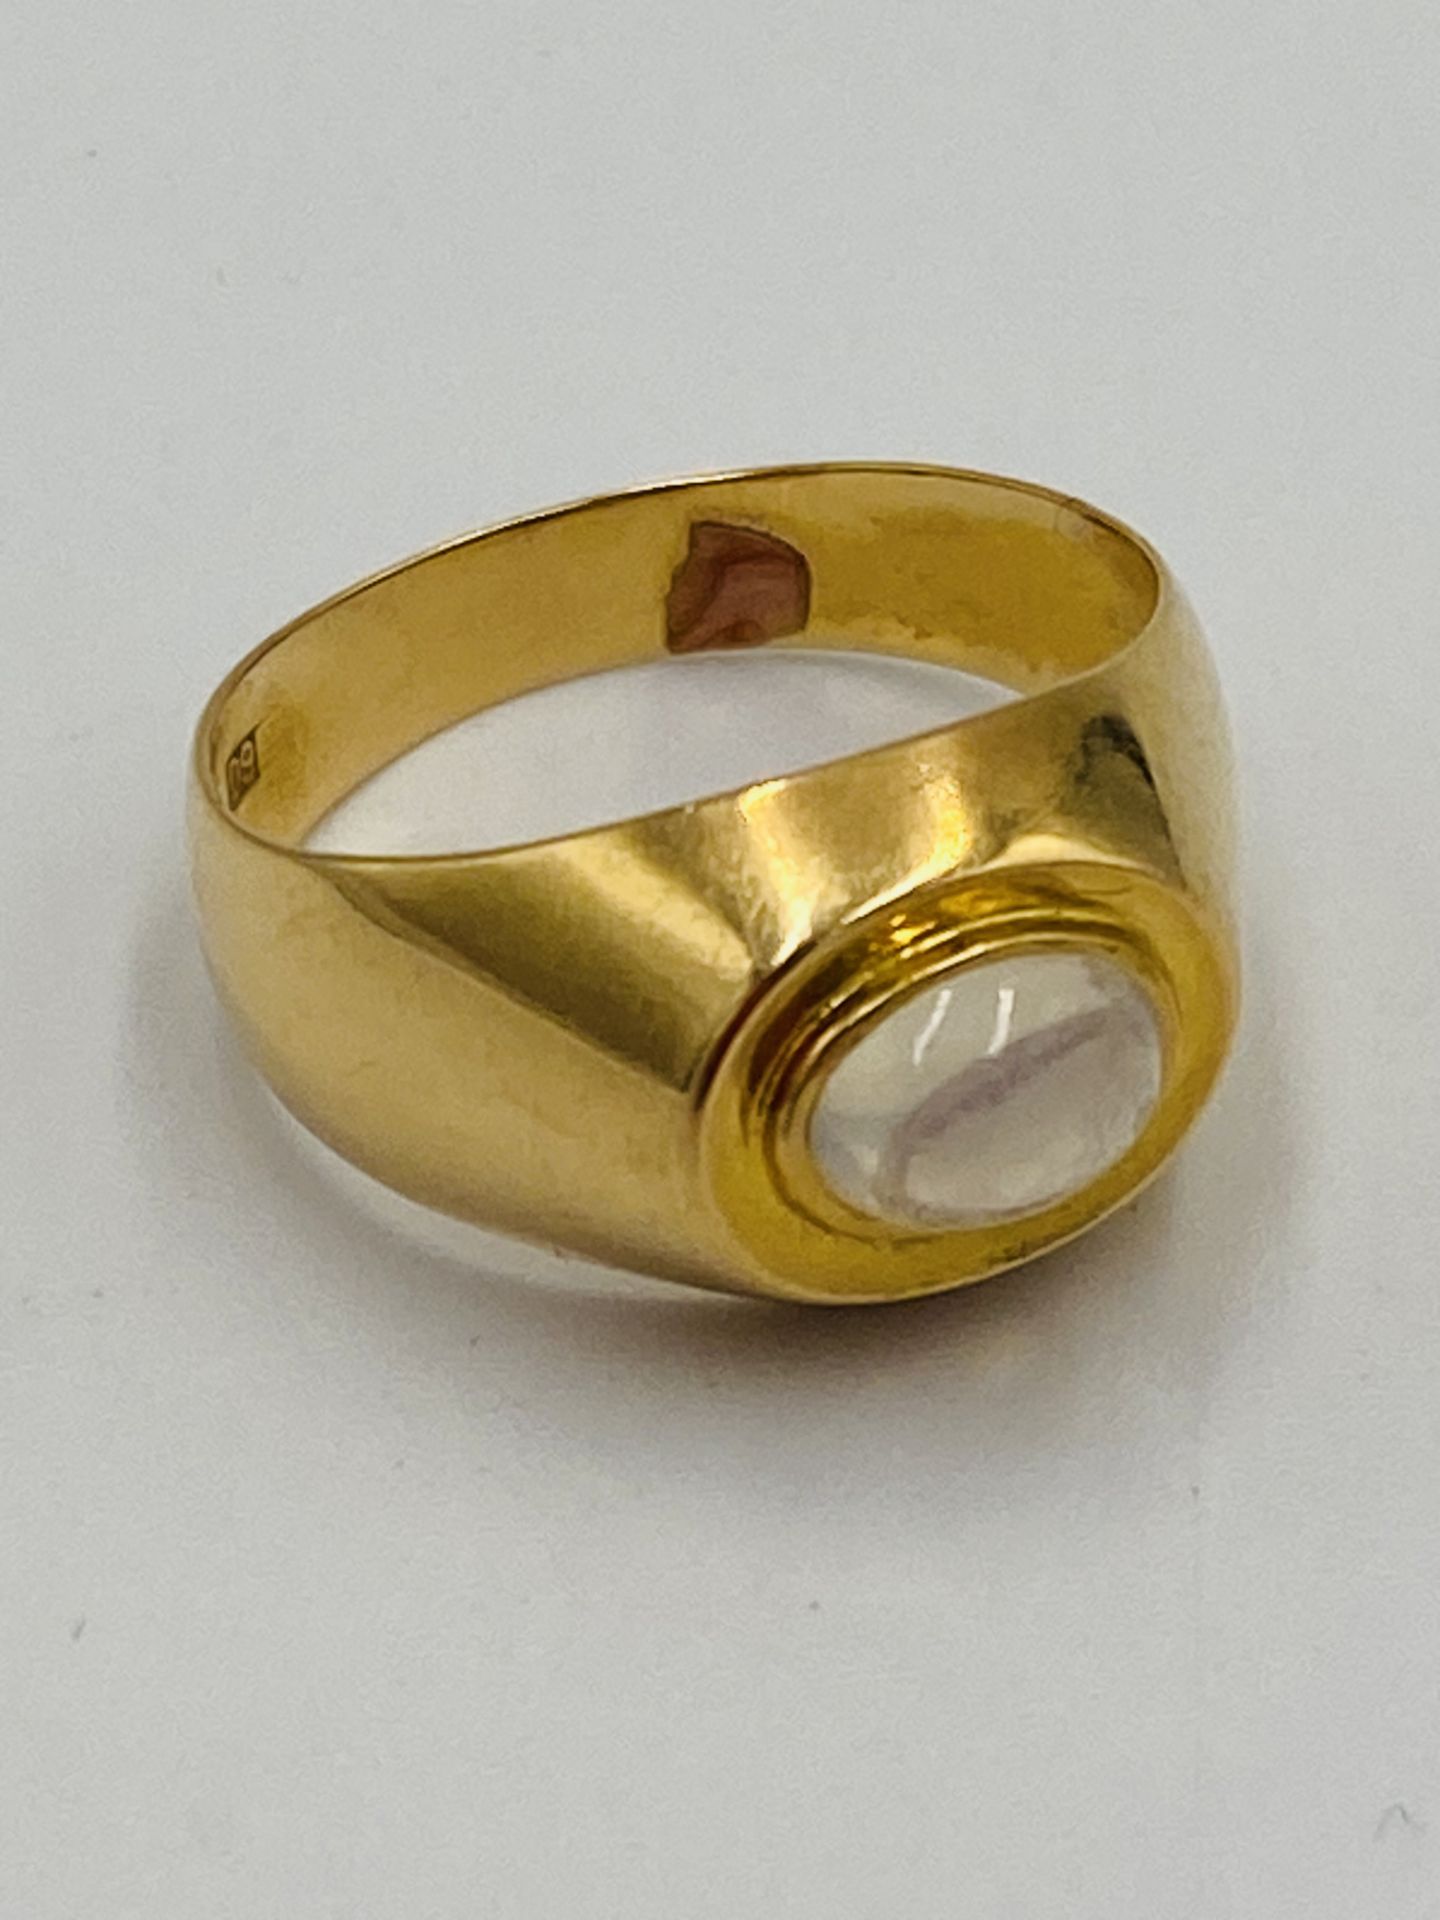 18ct gold signet ring - Image 4 of 4